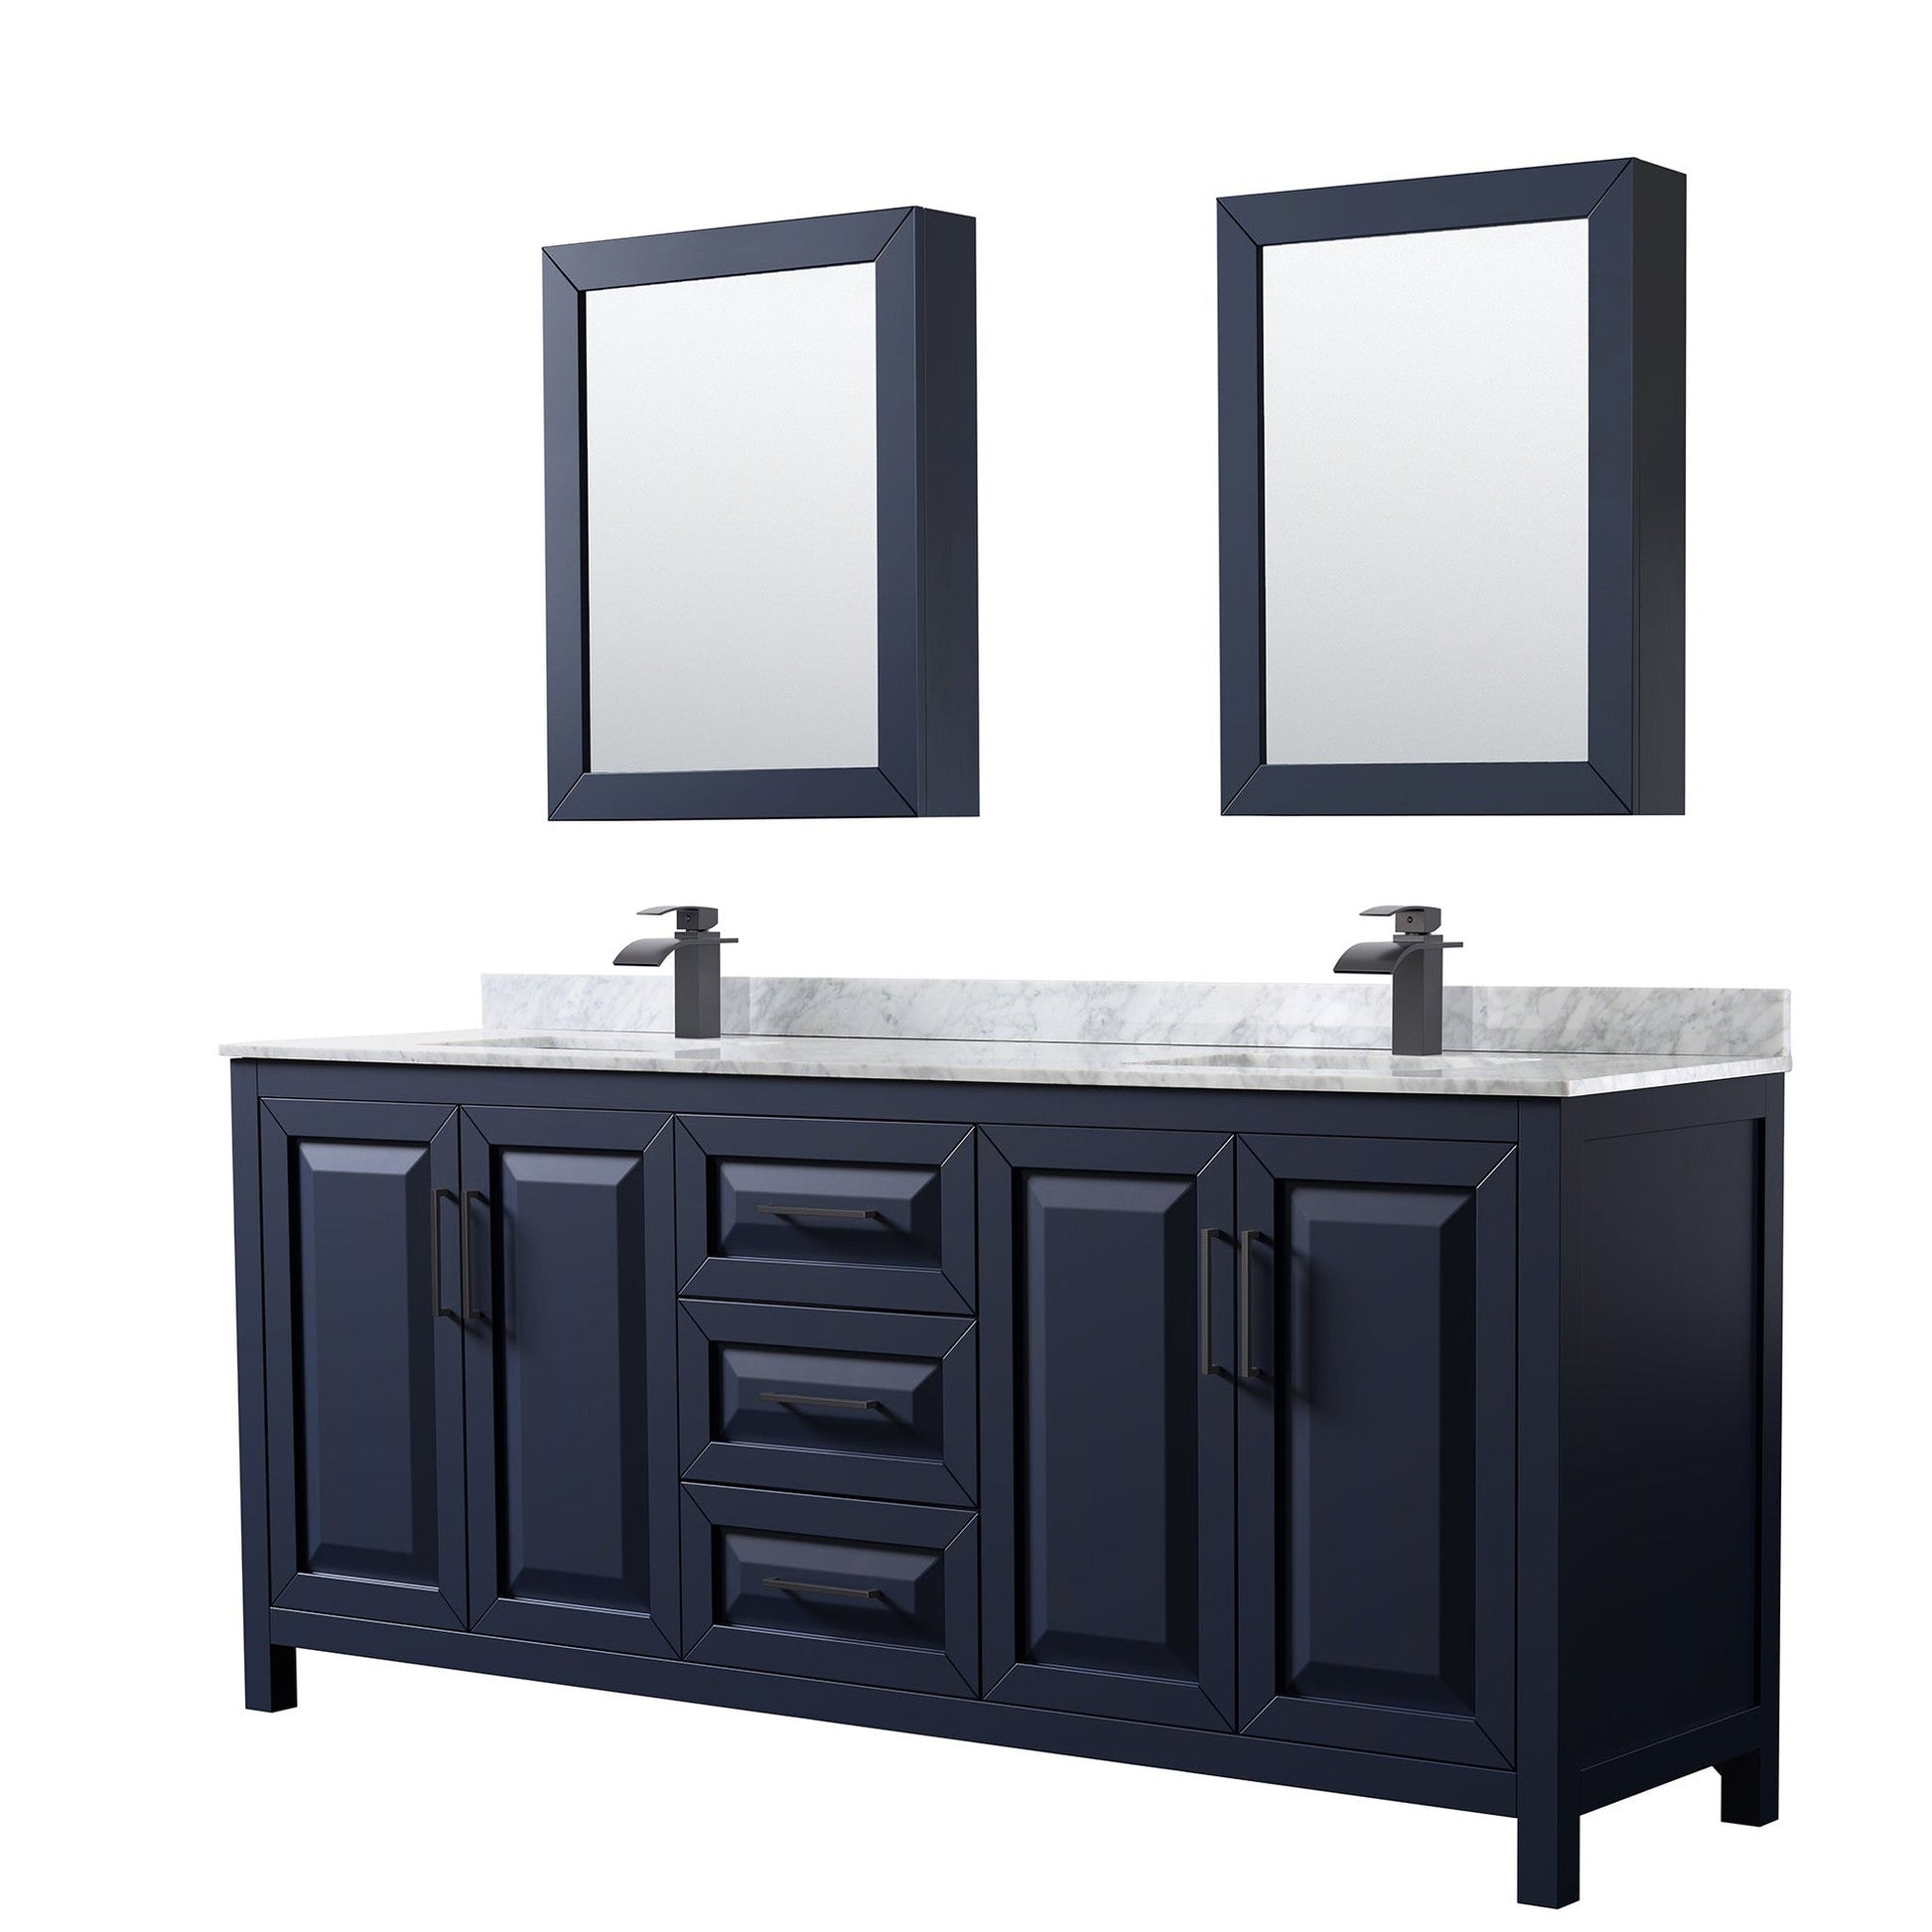 Daria 80" Double Bathroom Vanity in Dark Blue, White Carrara Marble Countertop, Undermount Square Sinks, Matte Black Trim, Medicine Cabinets